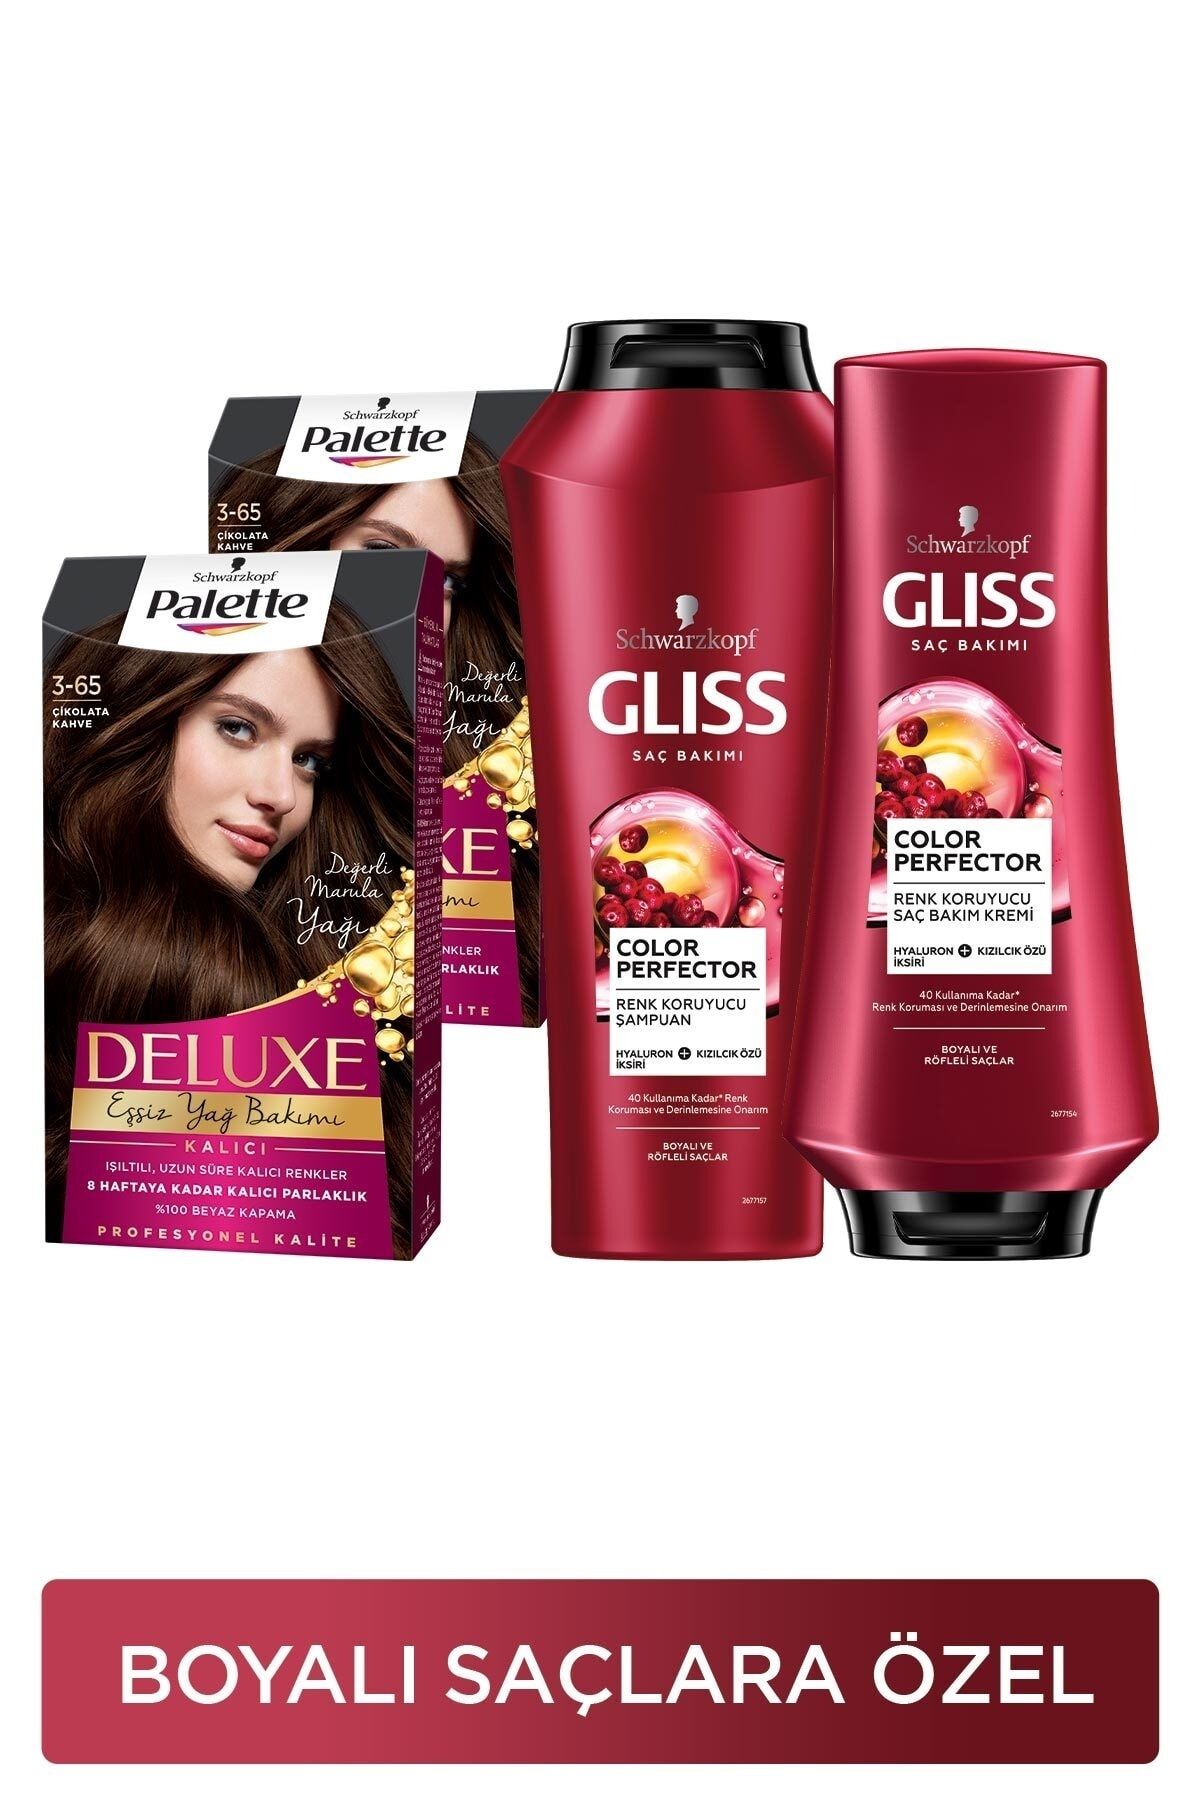 Gliss Palette Deluxe 3-65 Çikolata Kahve x 2 Adet + Color Perfector Renk Koruyucu Şampuan